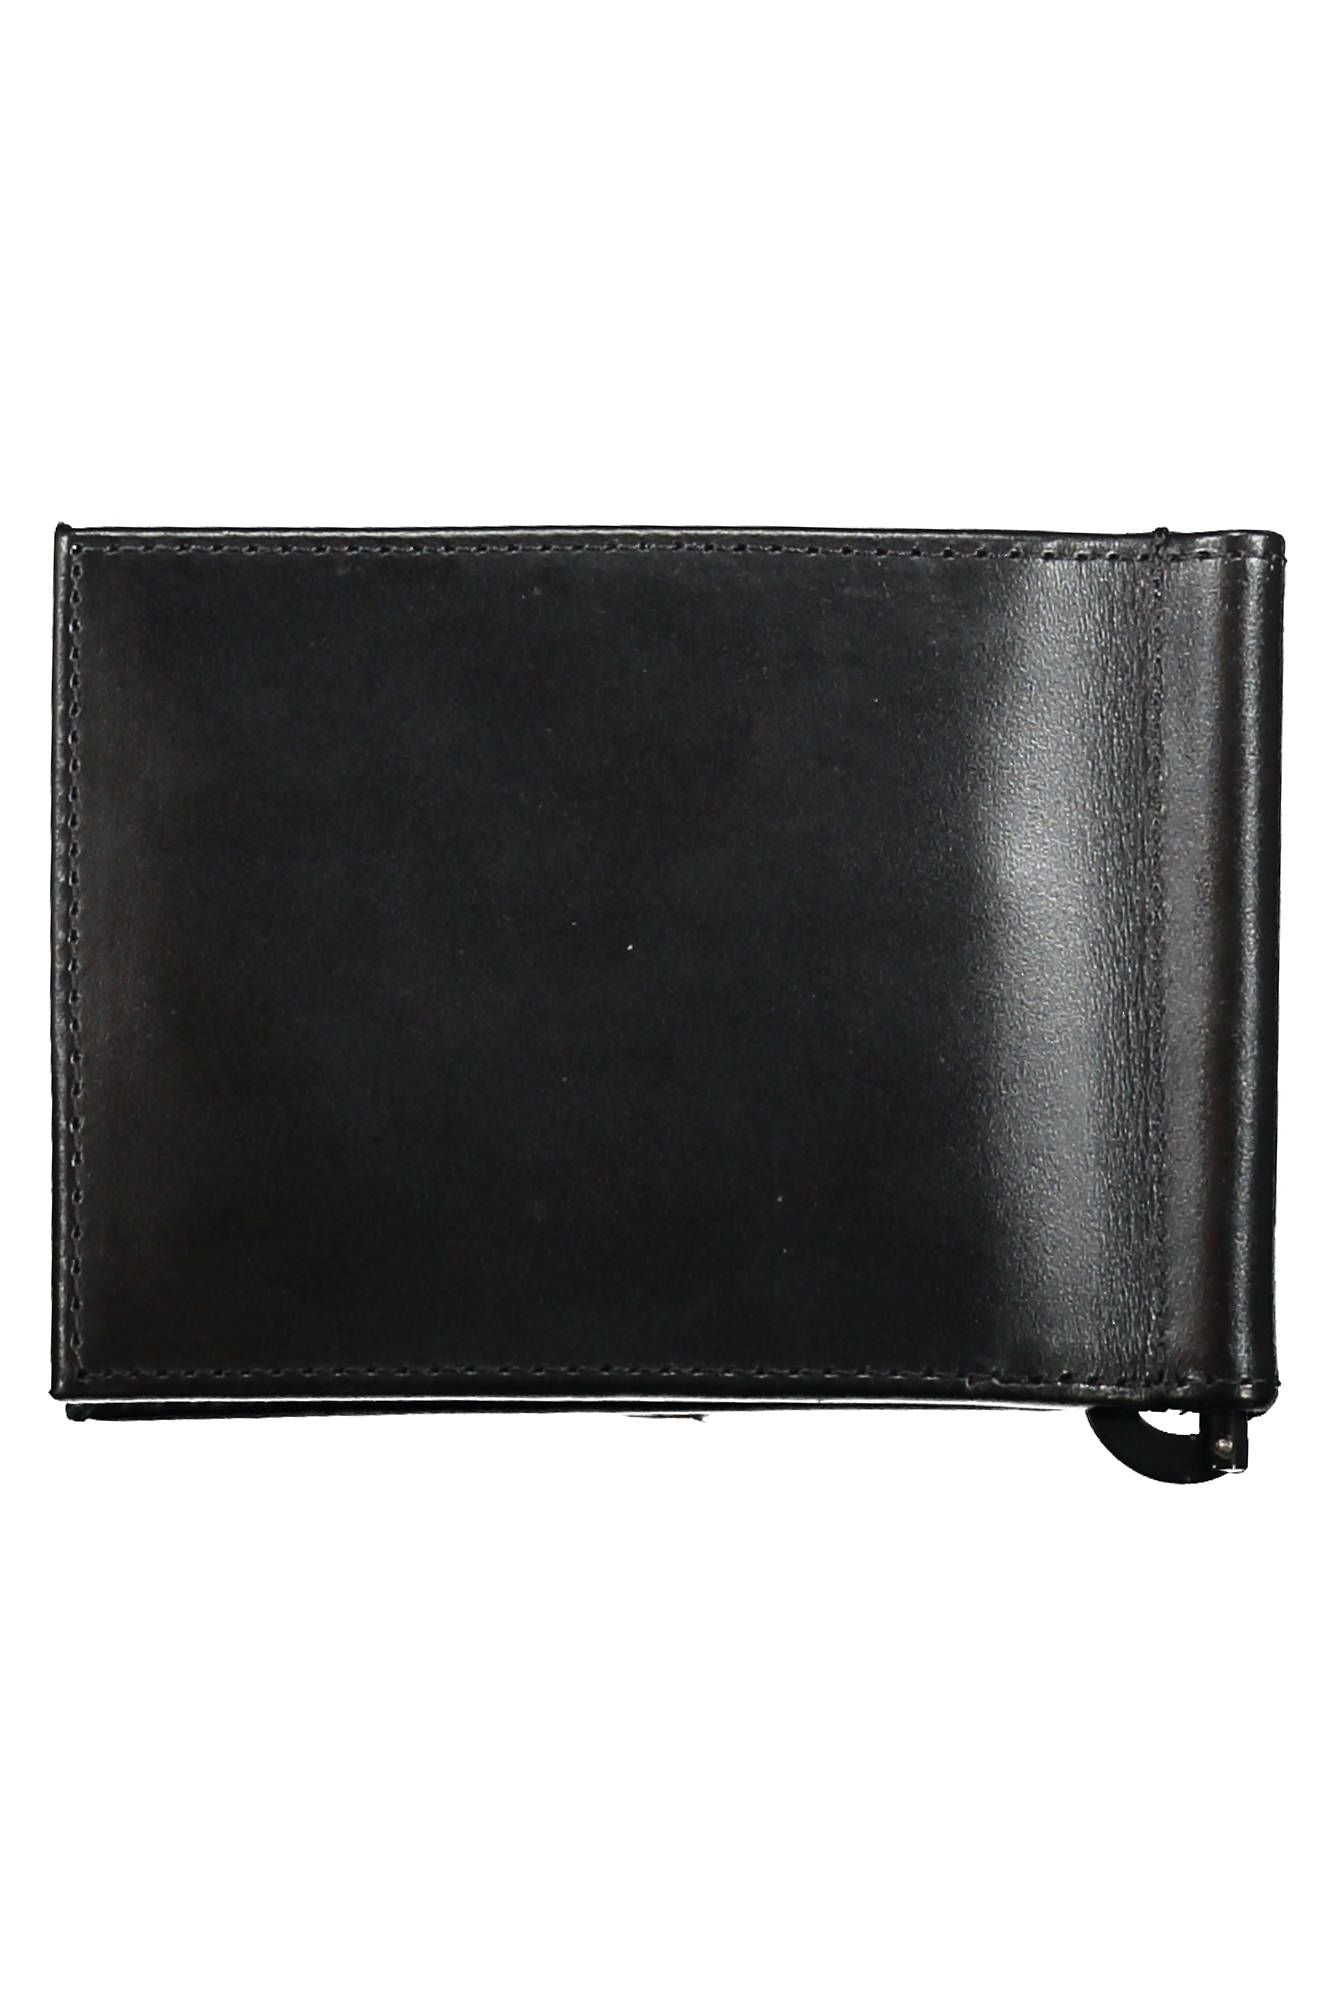 Sleek Black Leather RFID Wallet